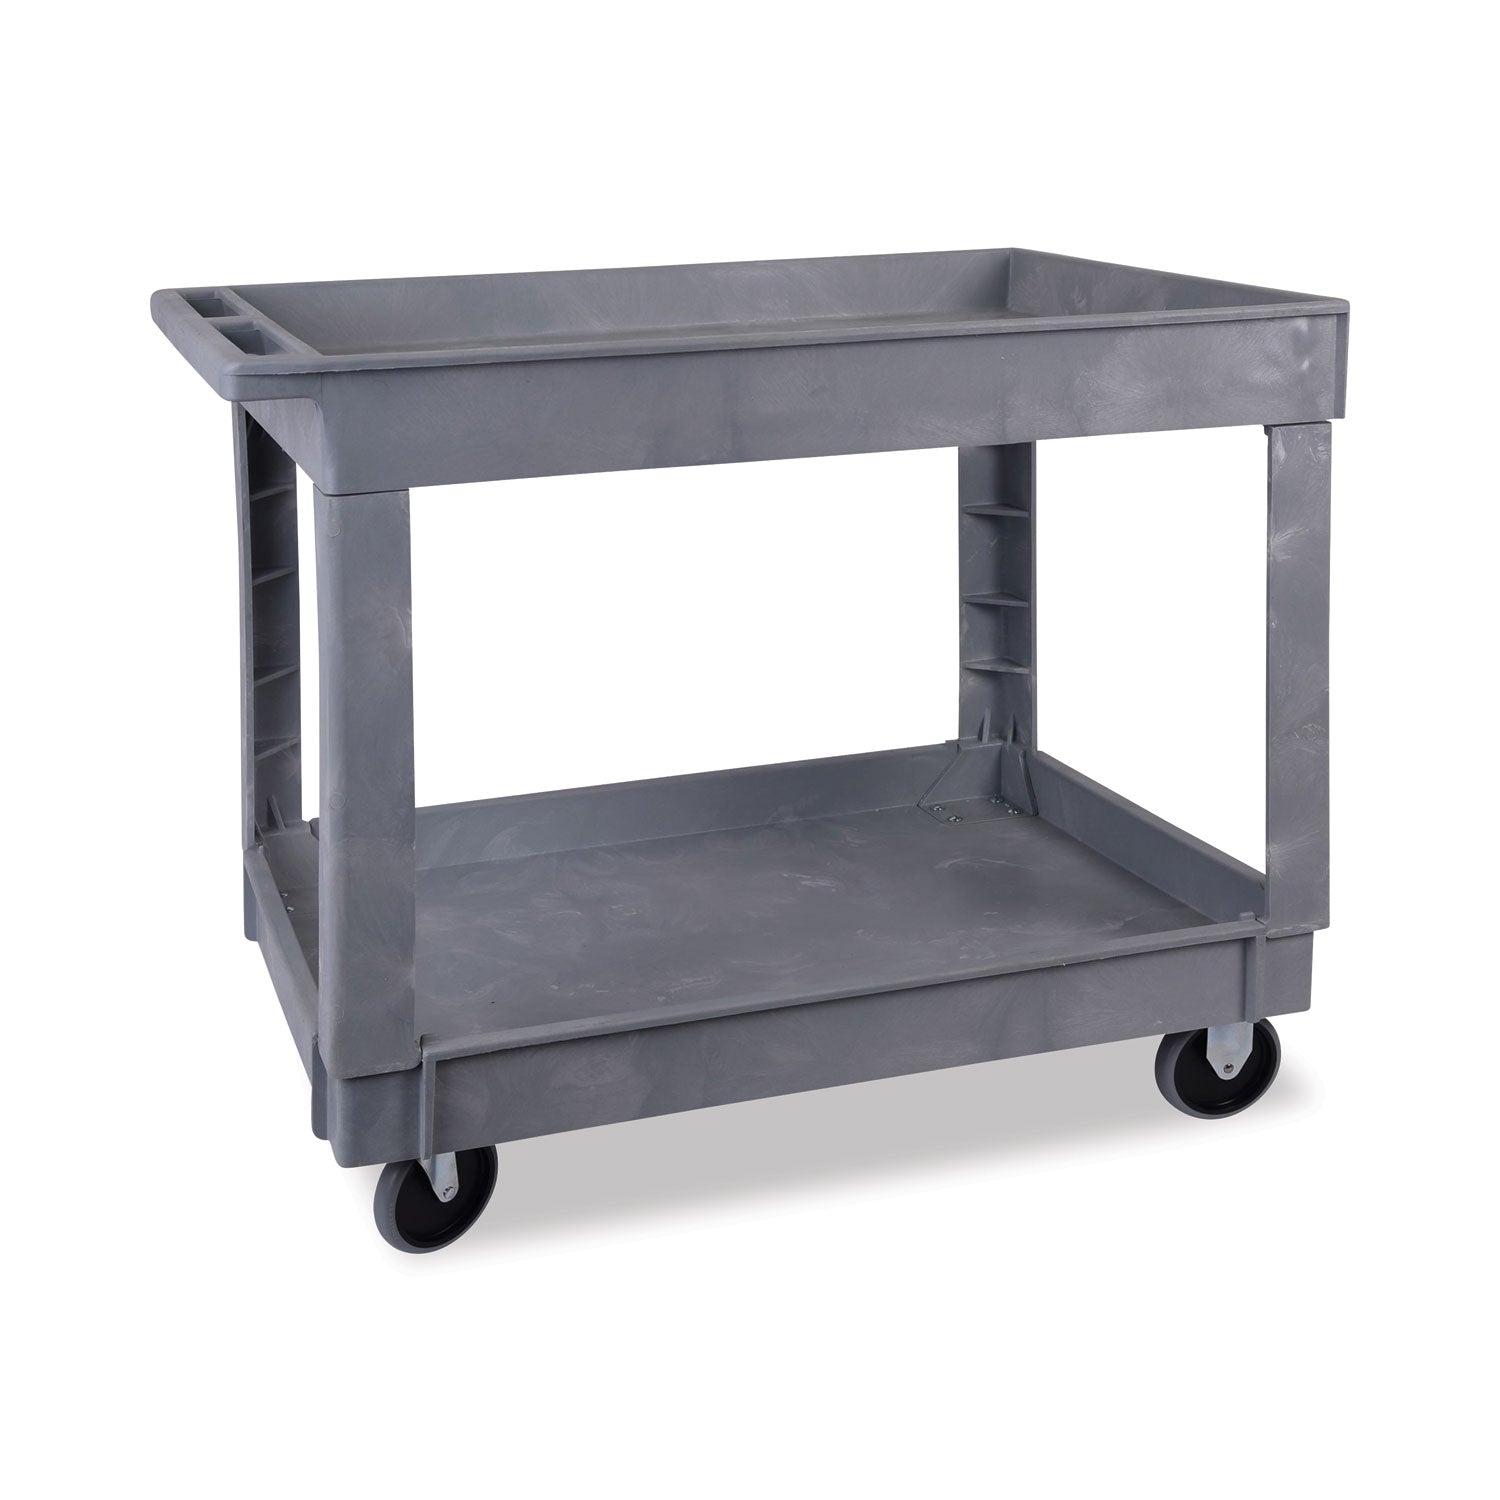 two-shelf-utility-cart-plastic-2-shelves-300-lb-capacity-24-x-40-x-315-gray_bwk4024ucgra - 1